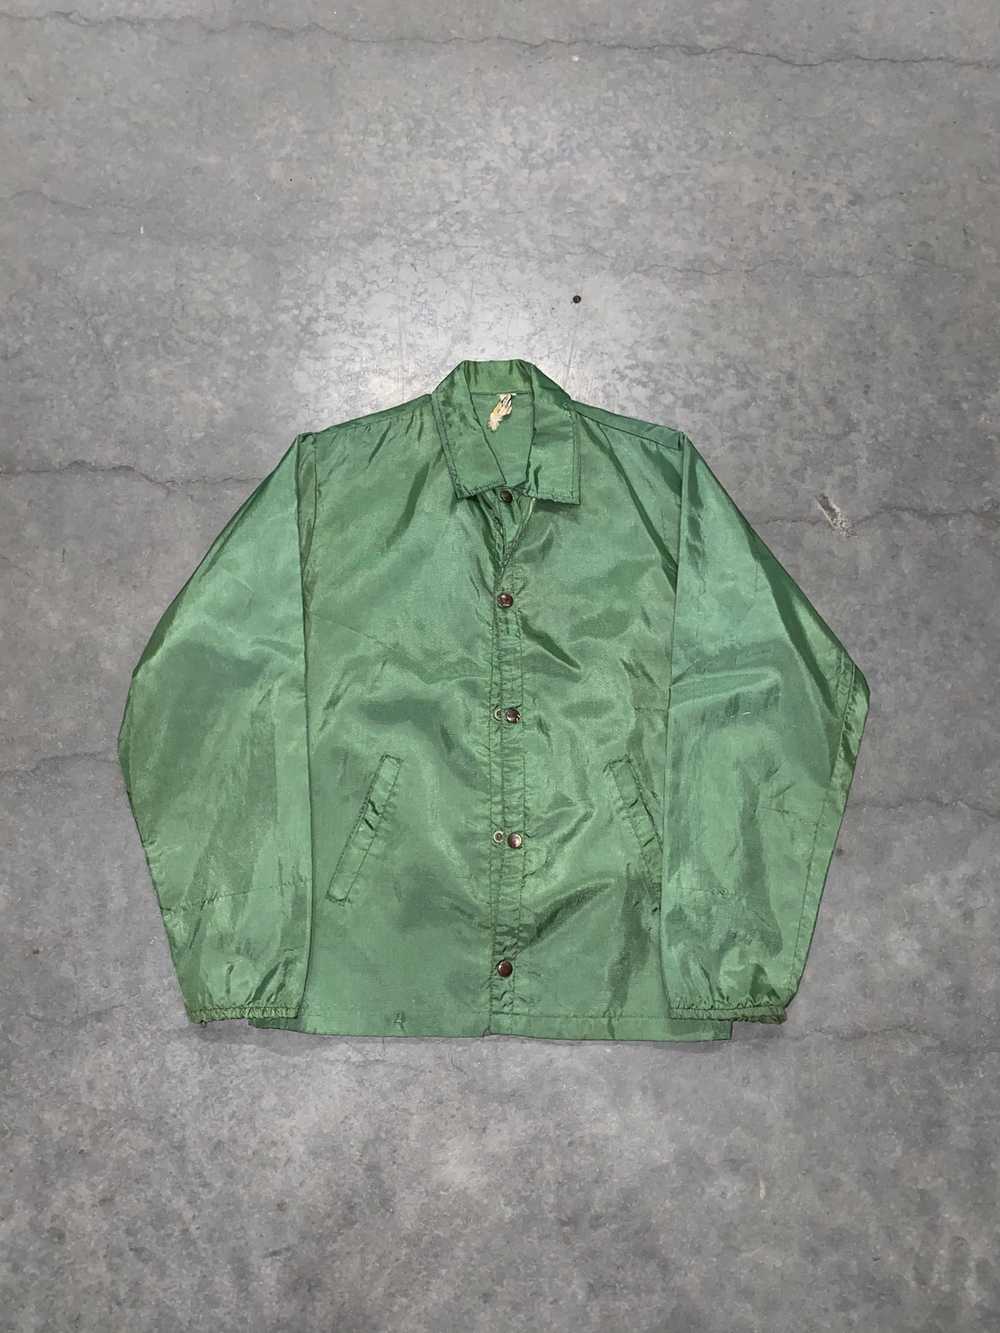 Vintage vintage 70s/80s pine green nylon jacket - image 1